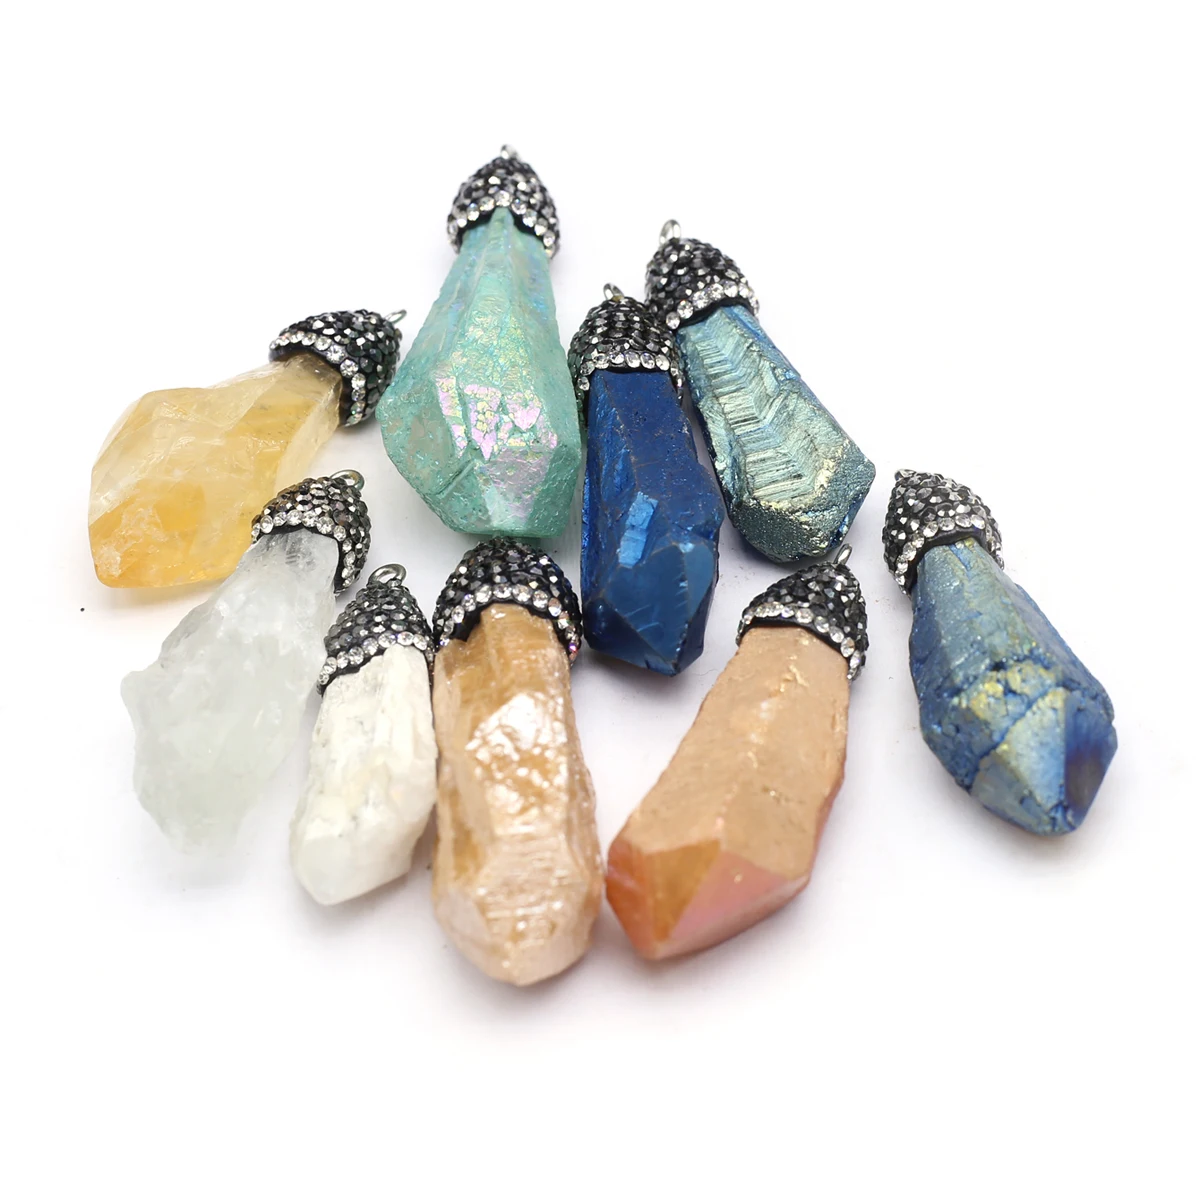 

2 PCS Natural Semi-Precious Stones Random Colour Irregular Shape Pendant for DIY Jewelry Making Handmade Earring Necklace